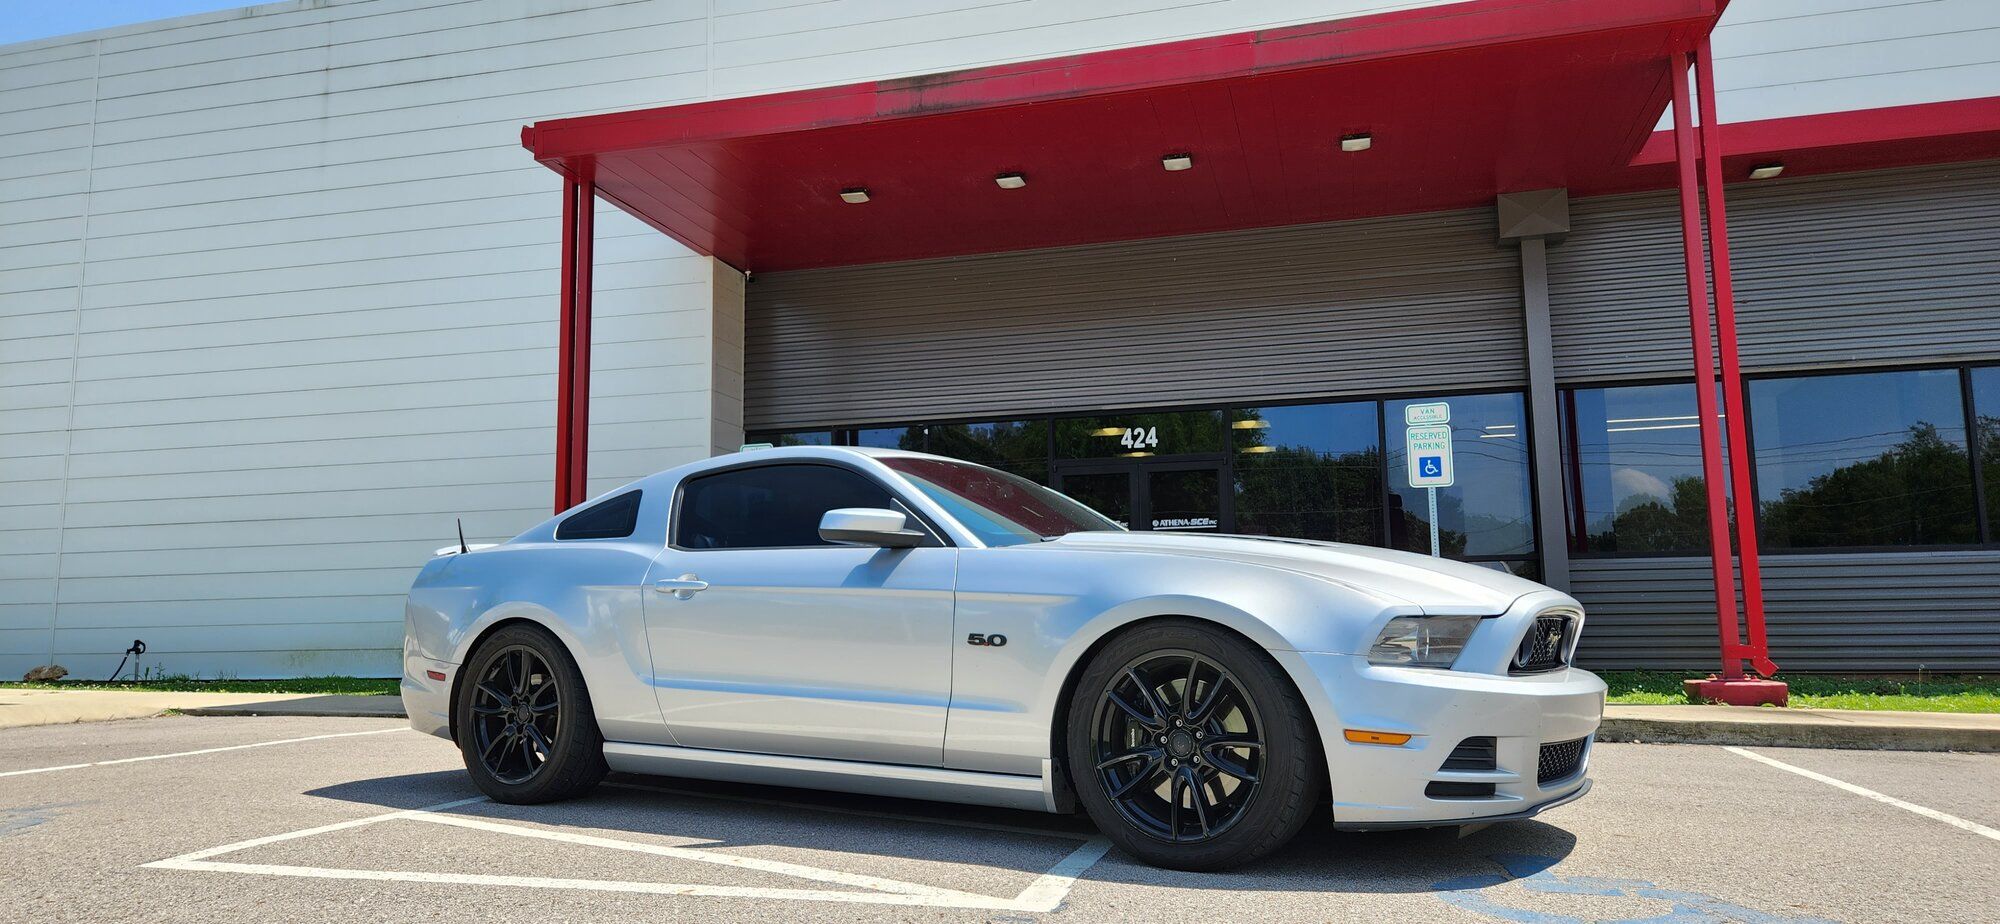 2013 Mustang
GT_50L HPDE/Track -  (First Fun Car)